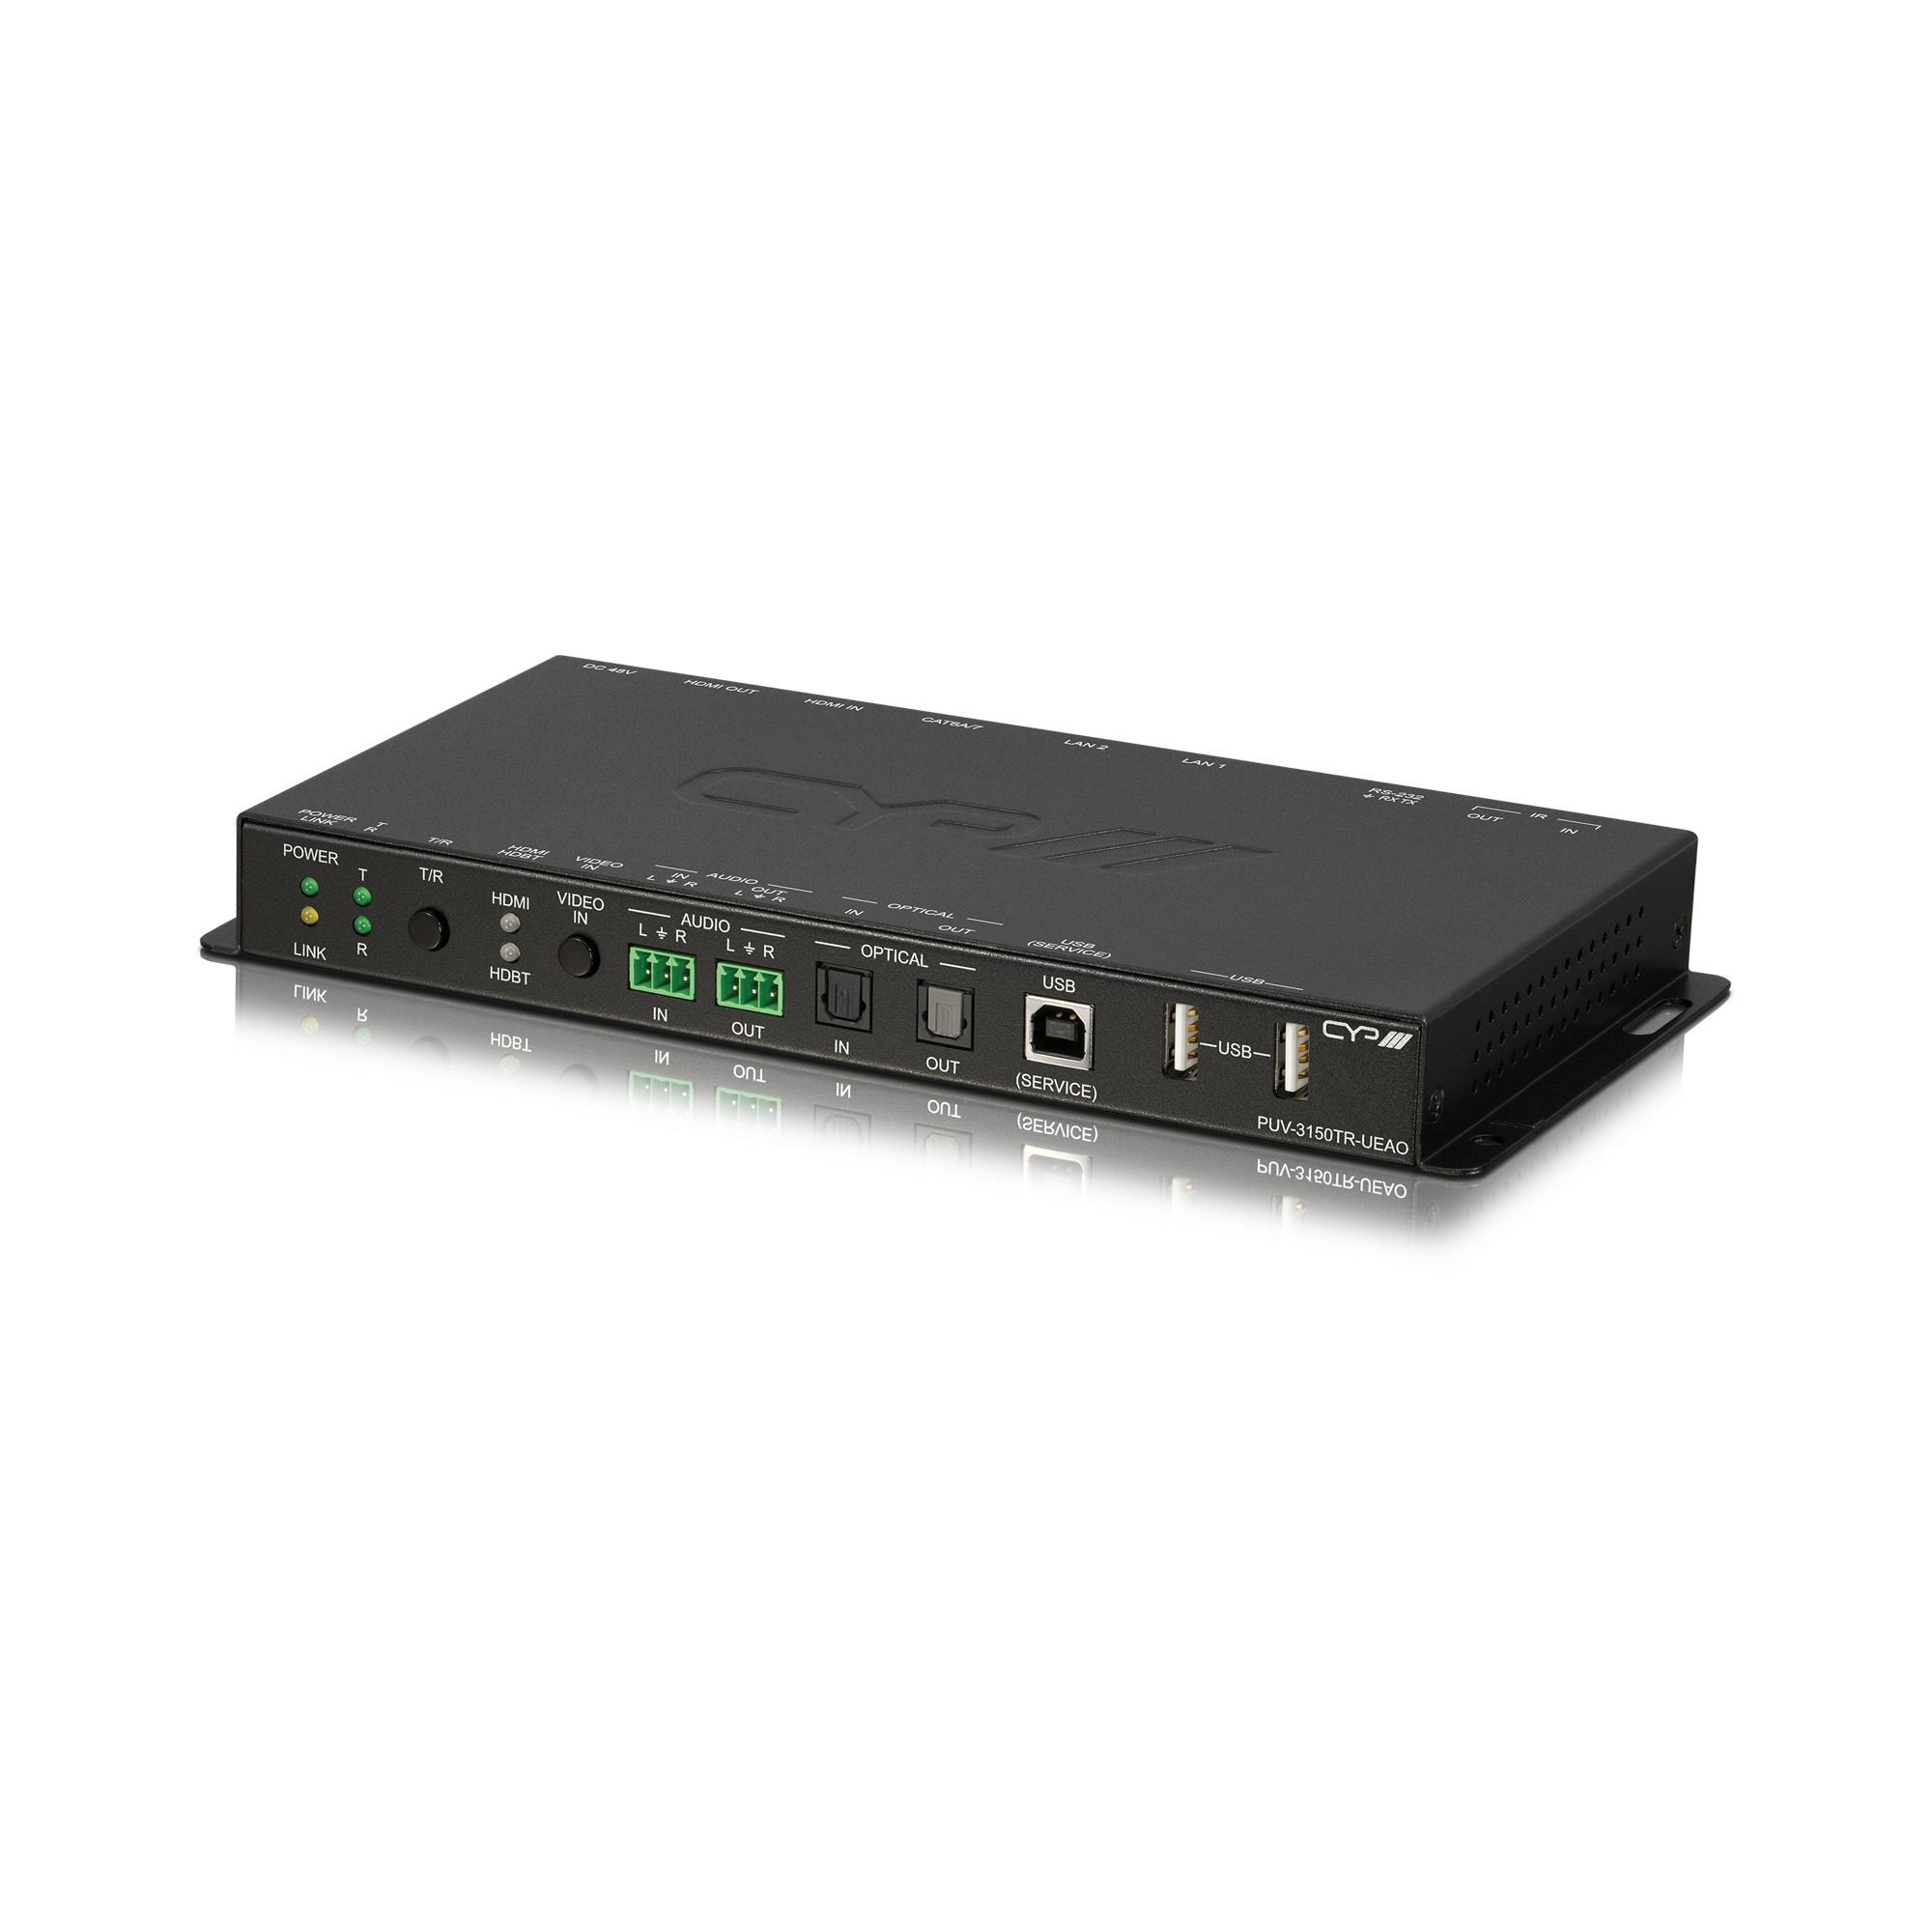 PUV-3150TR-UEAO 4K@60Hz 4:4:4 UHD+ HDMI over Transeiver with PoH, USB (KVM), LAN